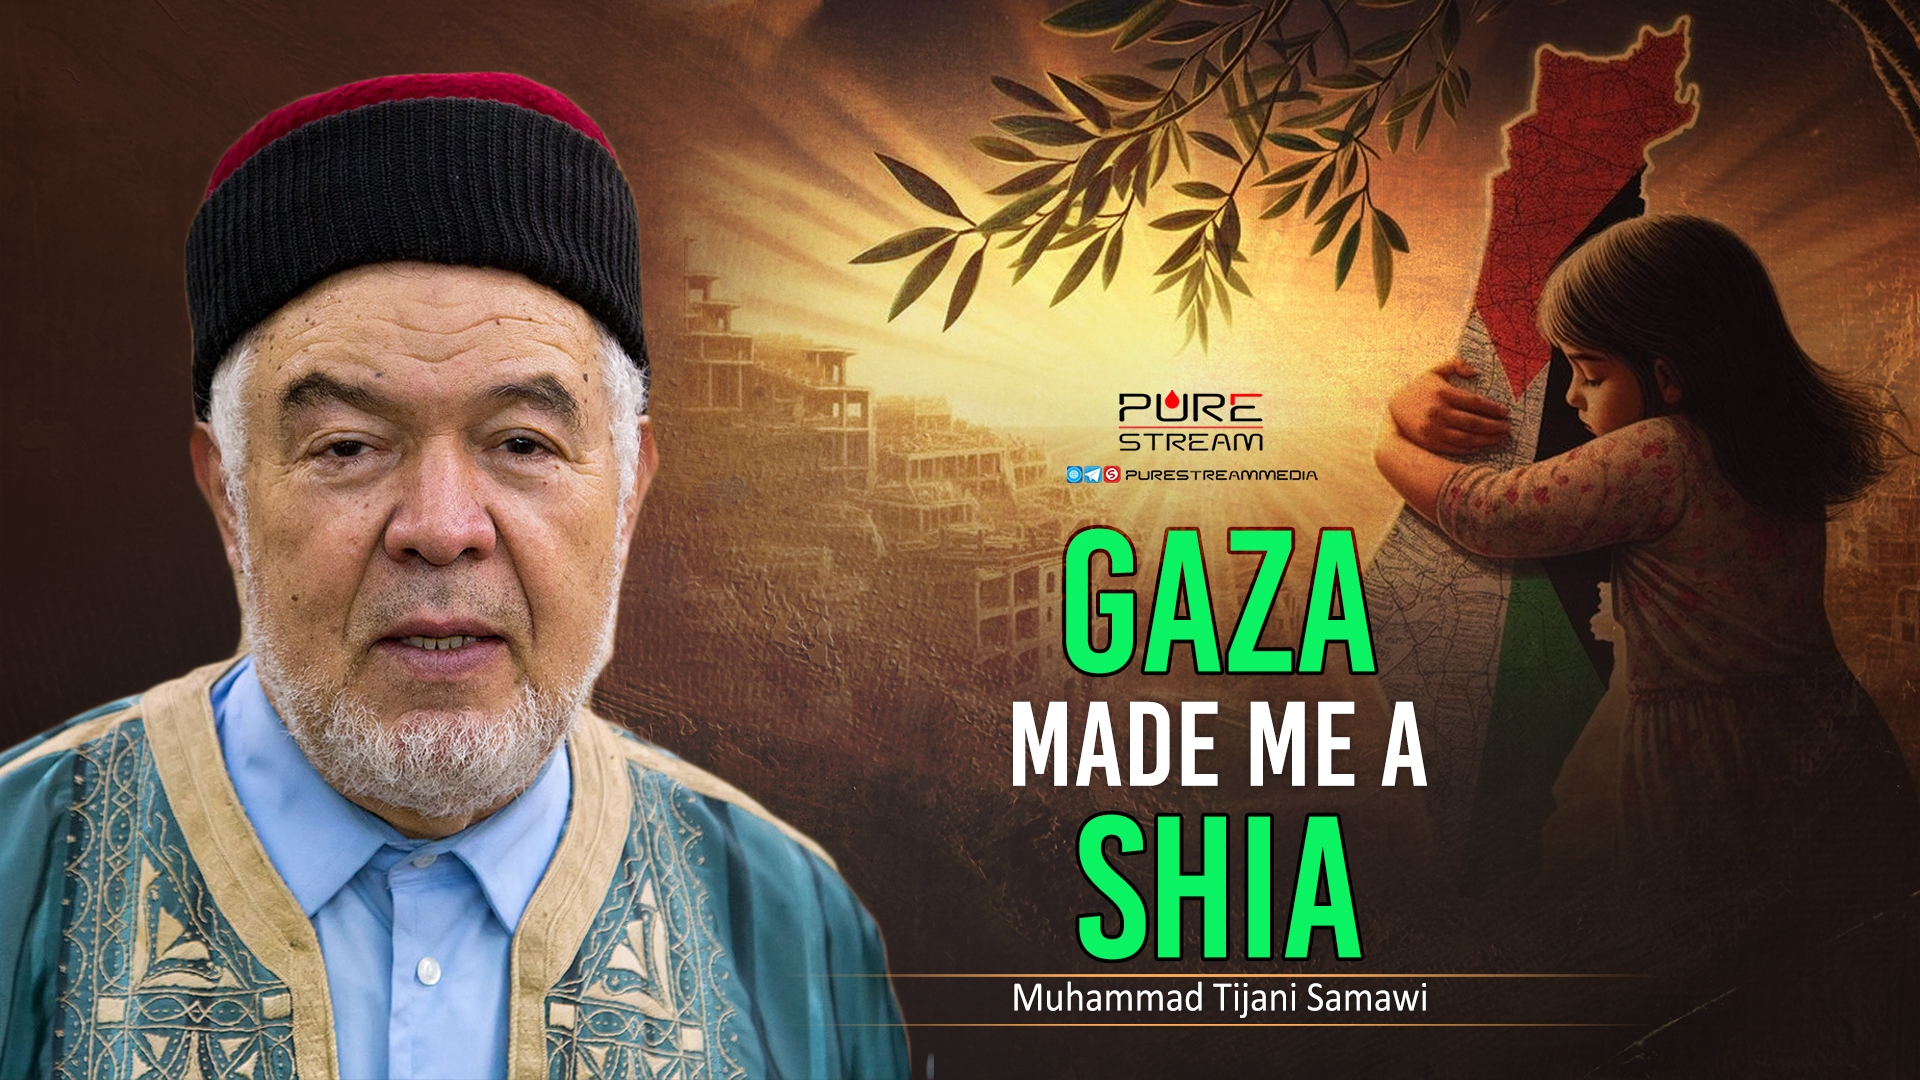 Gaza Made Me a Shia | Muhammad Tijani Samawi | Imam Khamenei | Arabic Sub English